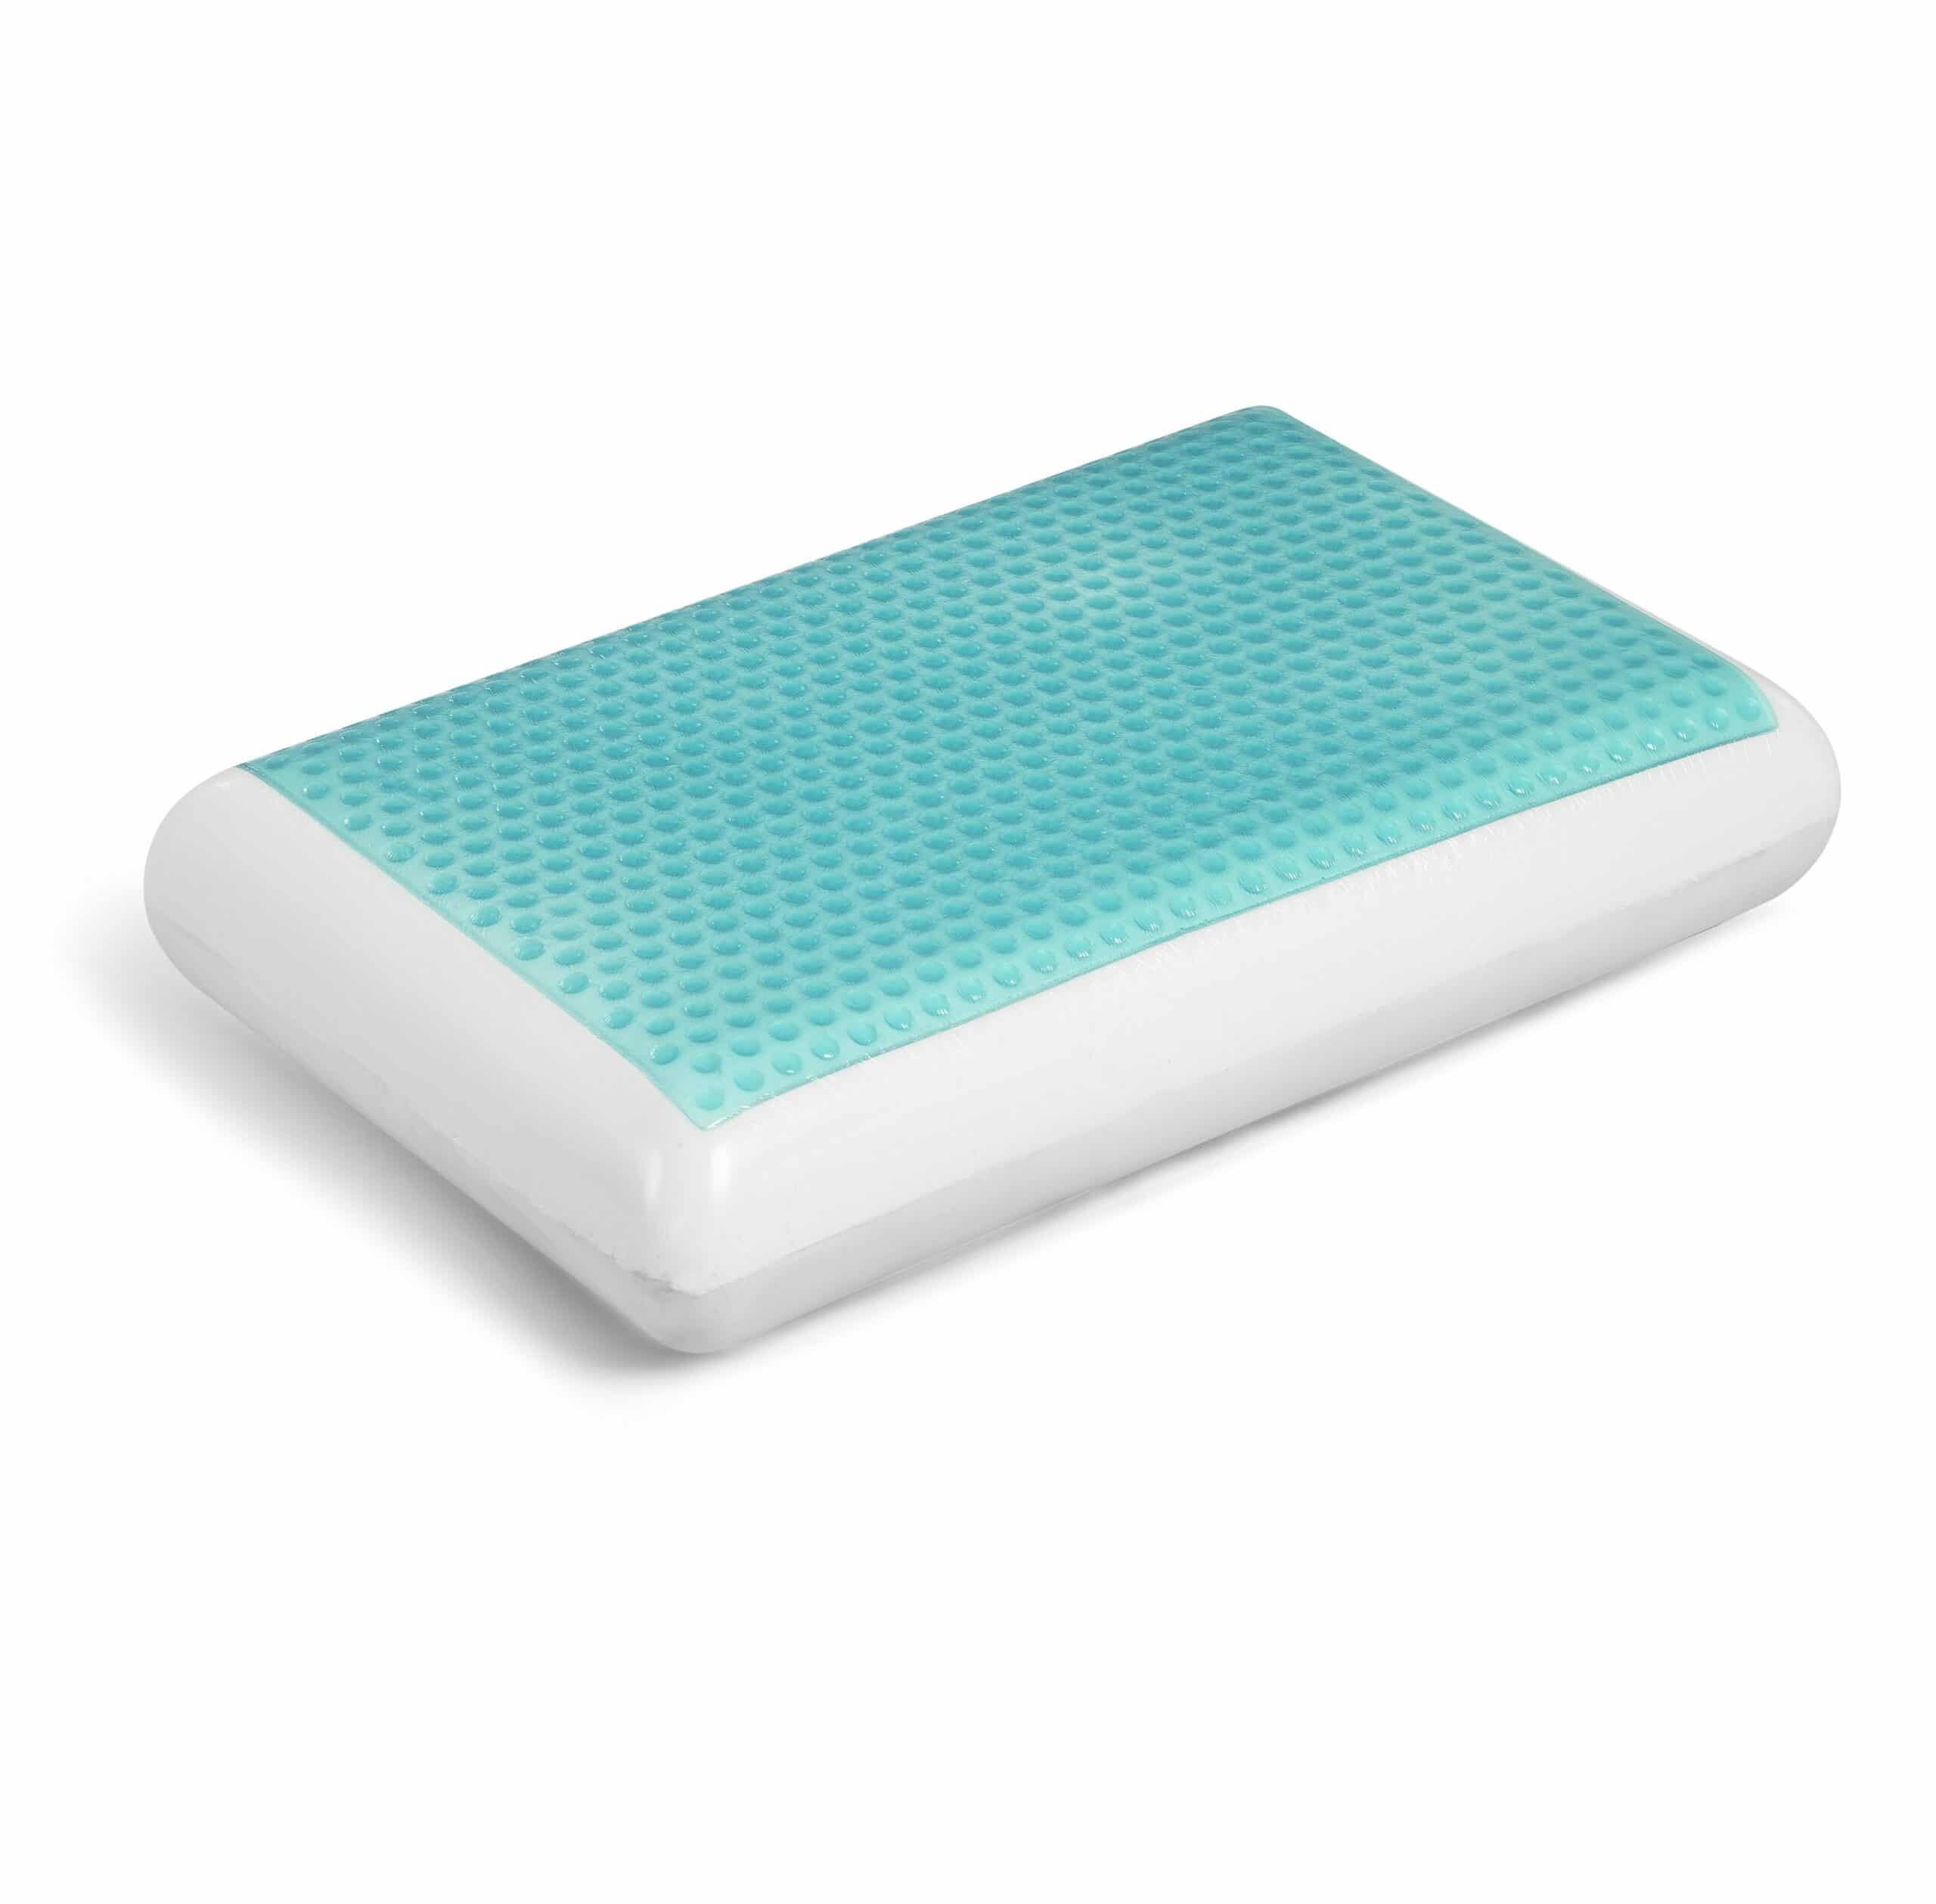 Cooling Memory Foam Gel Pillow- Soft